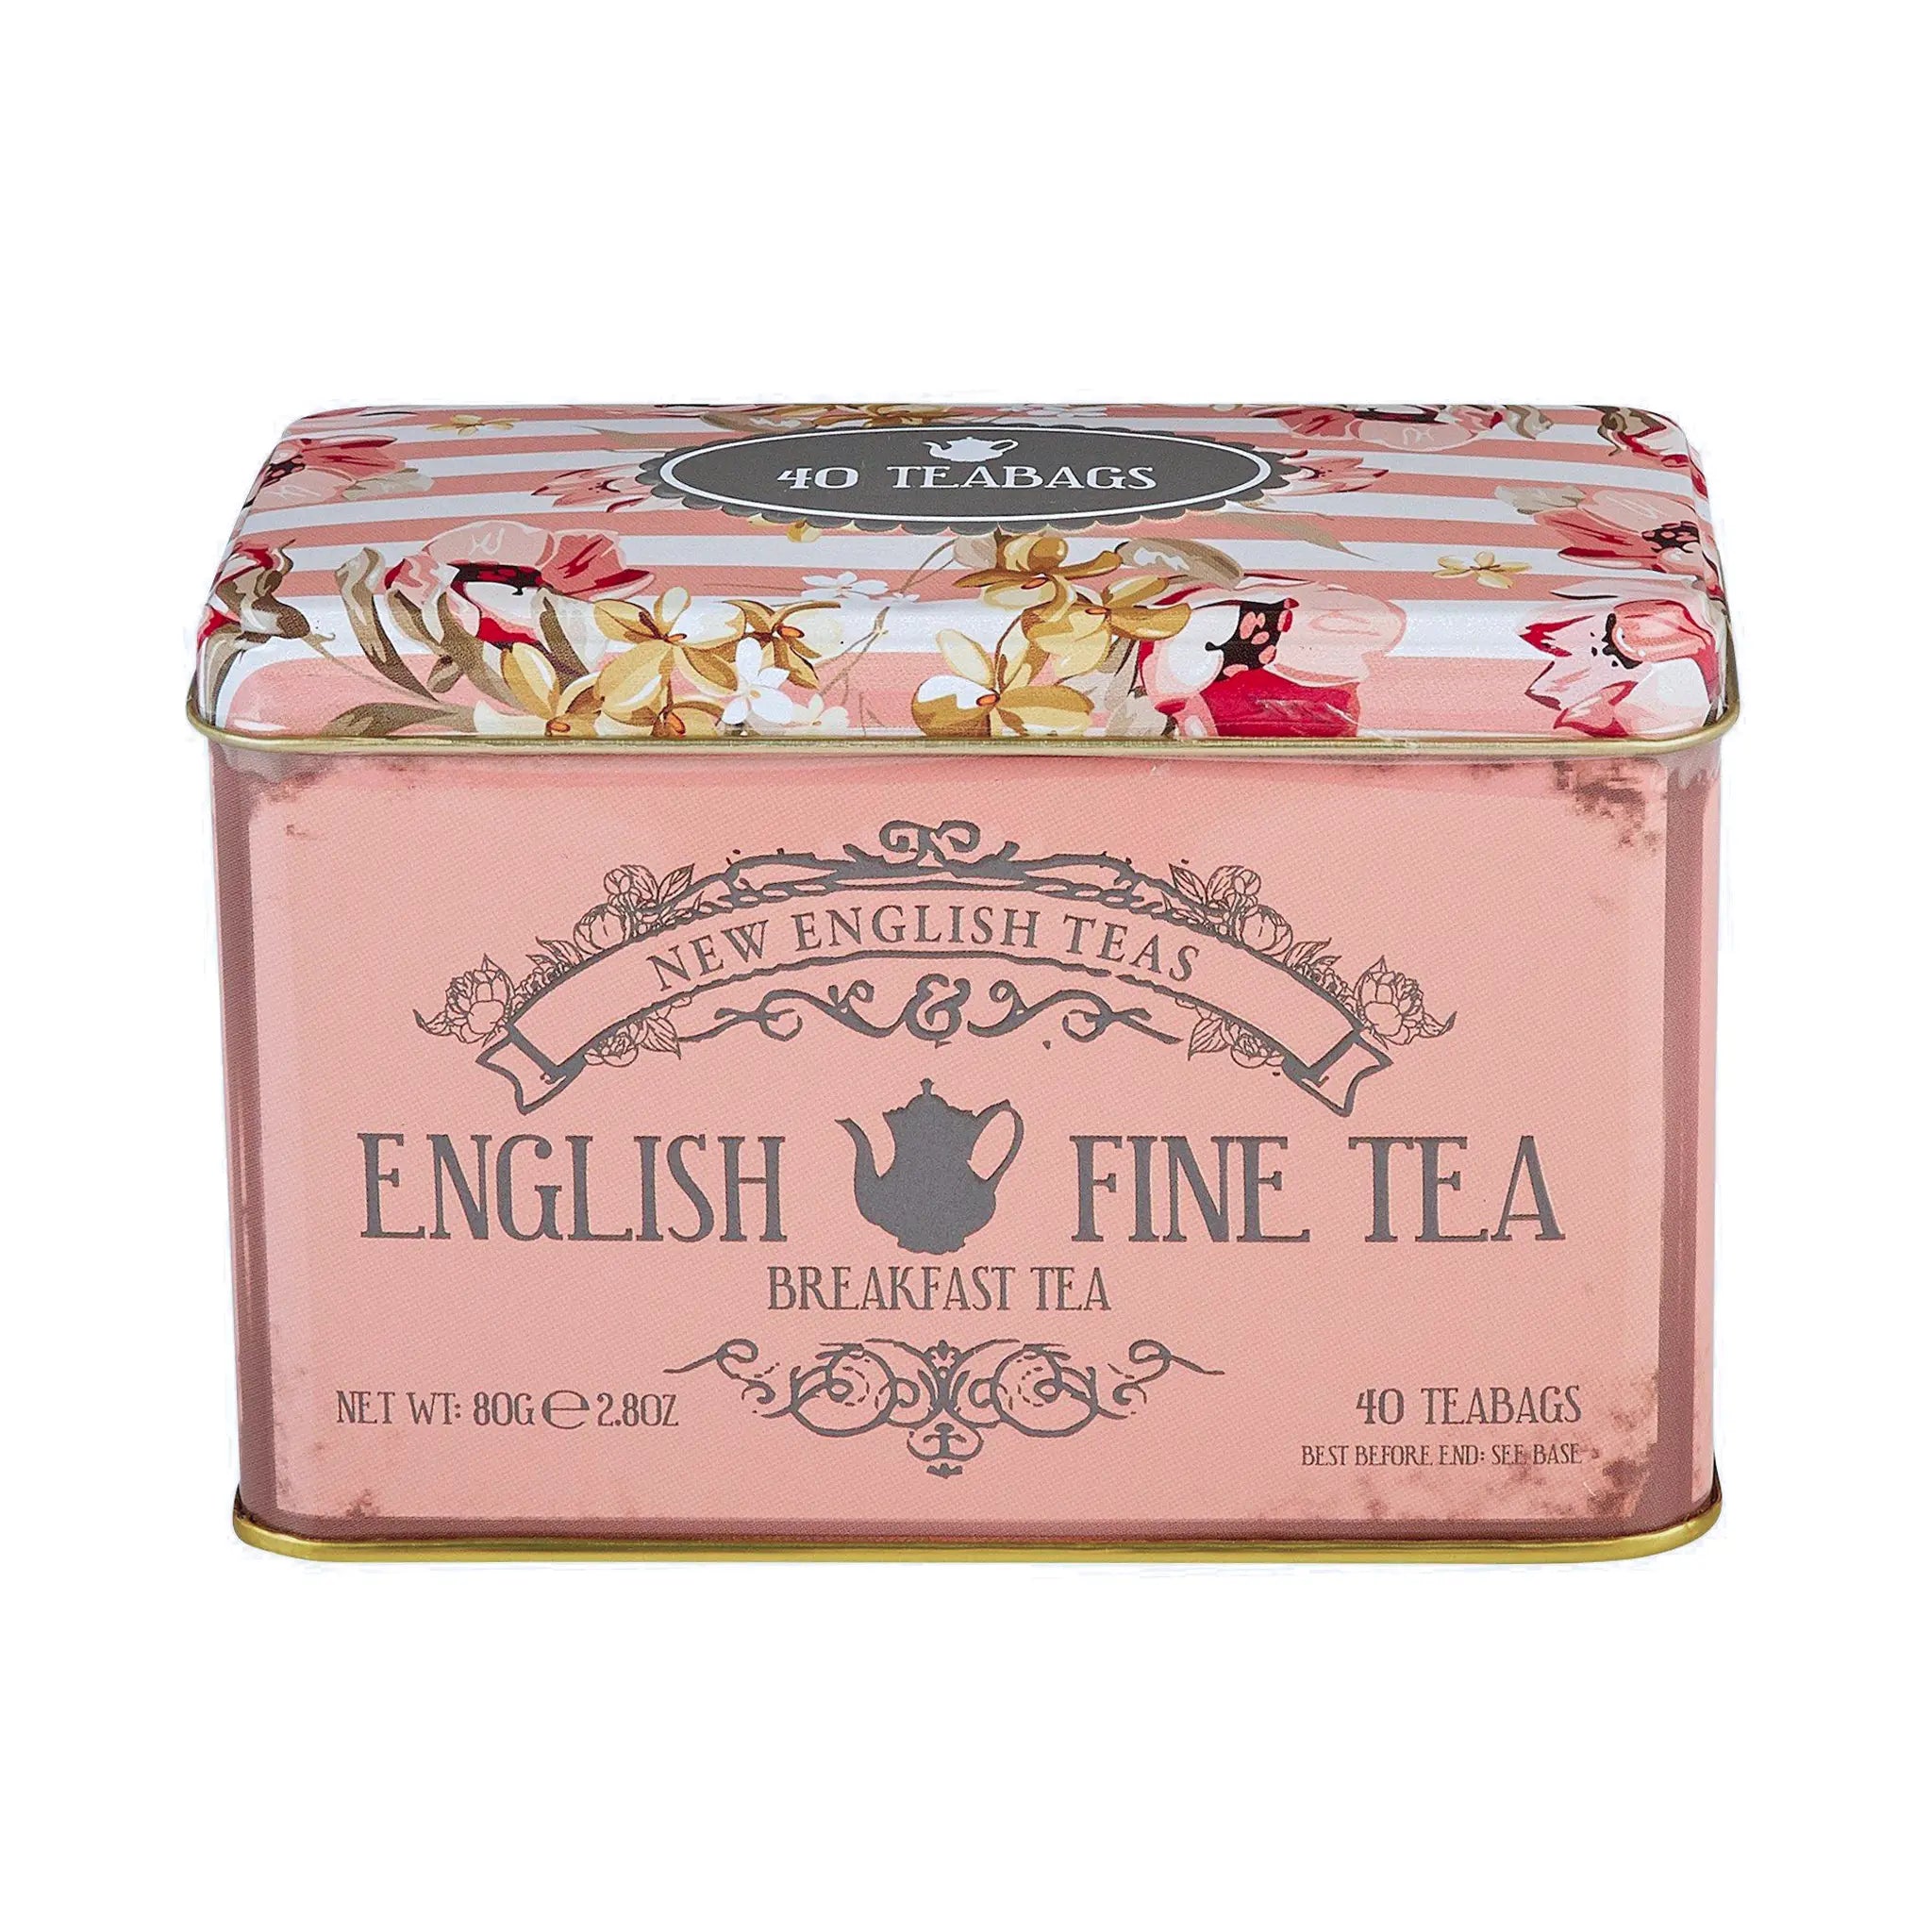 Vintage Floral Classic Tea Tin - Blush